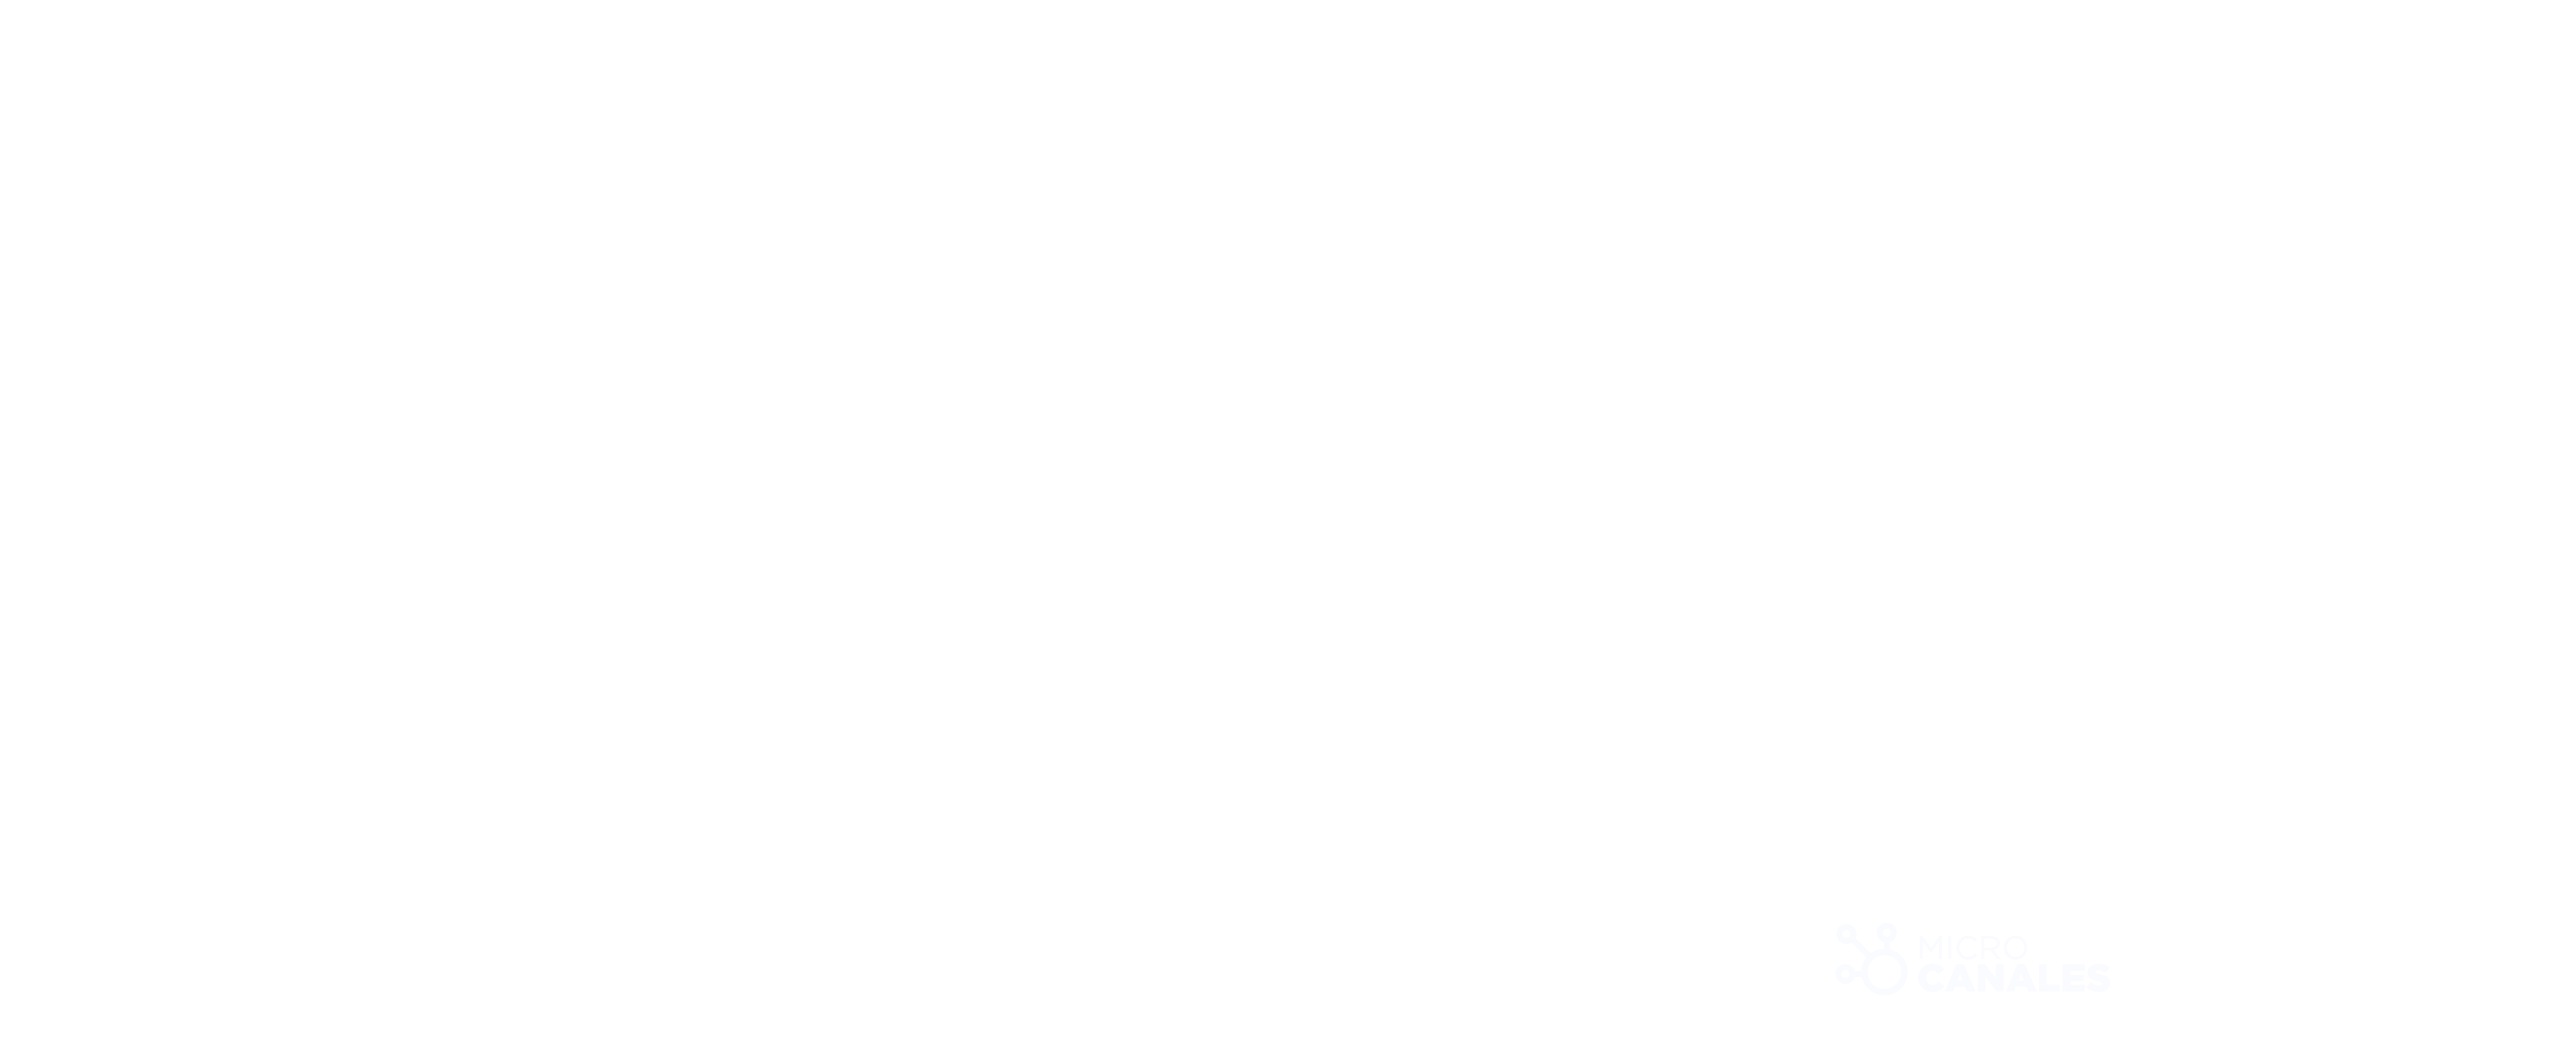 AMC Networks International